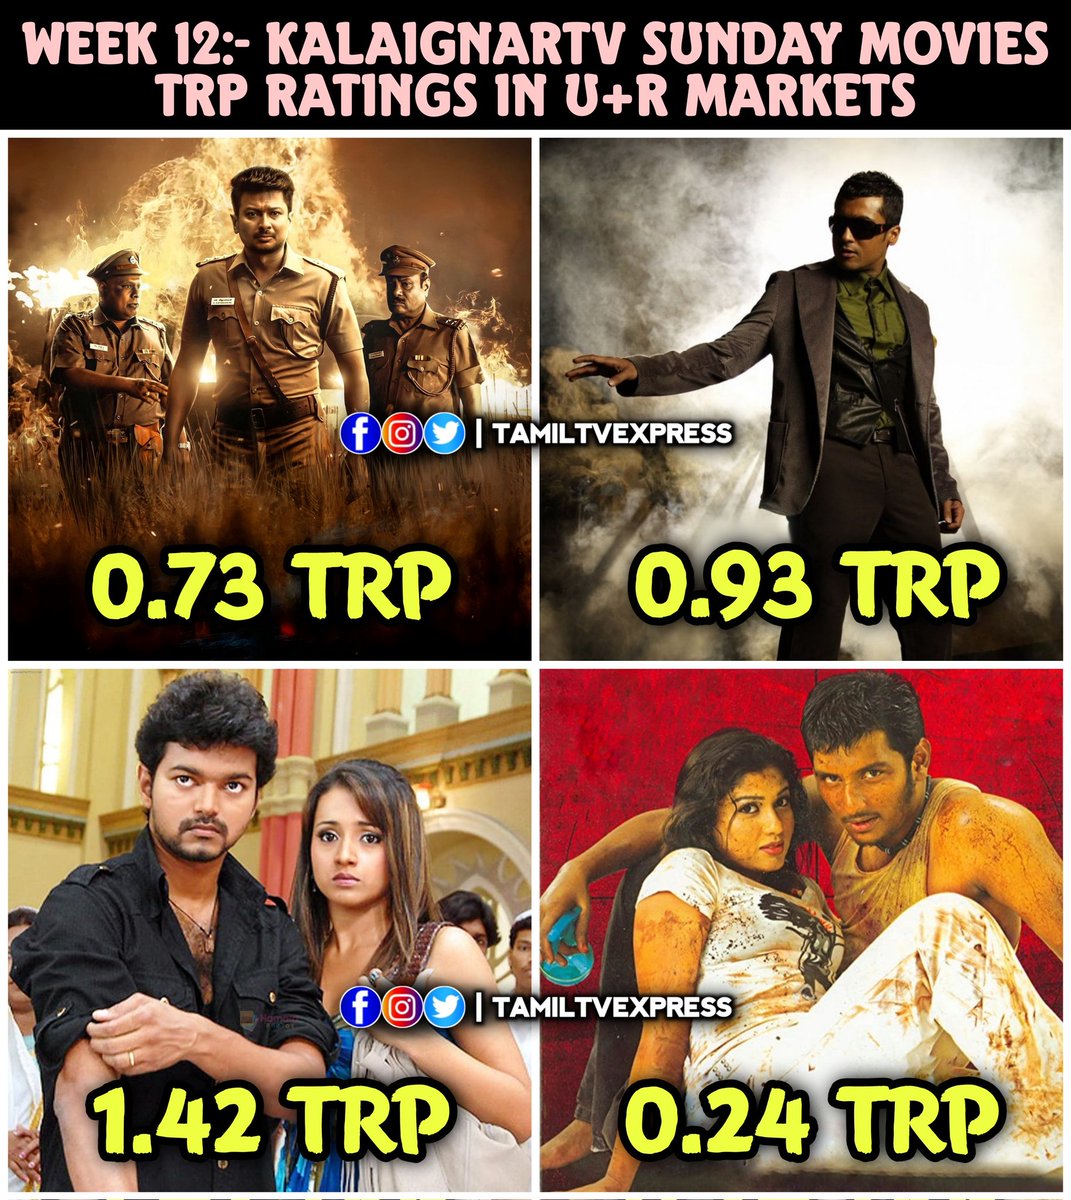 Week 12:- #KalaignarTV Sunday Movies TRP Ratings In U+R Markets 

#NenjukuNeedhi - 0.73
#Aadhavan -- 0.93
#Kuruvi -- 1.42 
#E -- 0.24

#UdhayanidhiStalin #Suriya #ThalapathyVijay #Jiiva